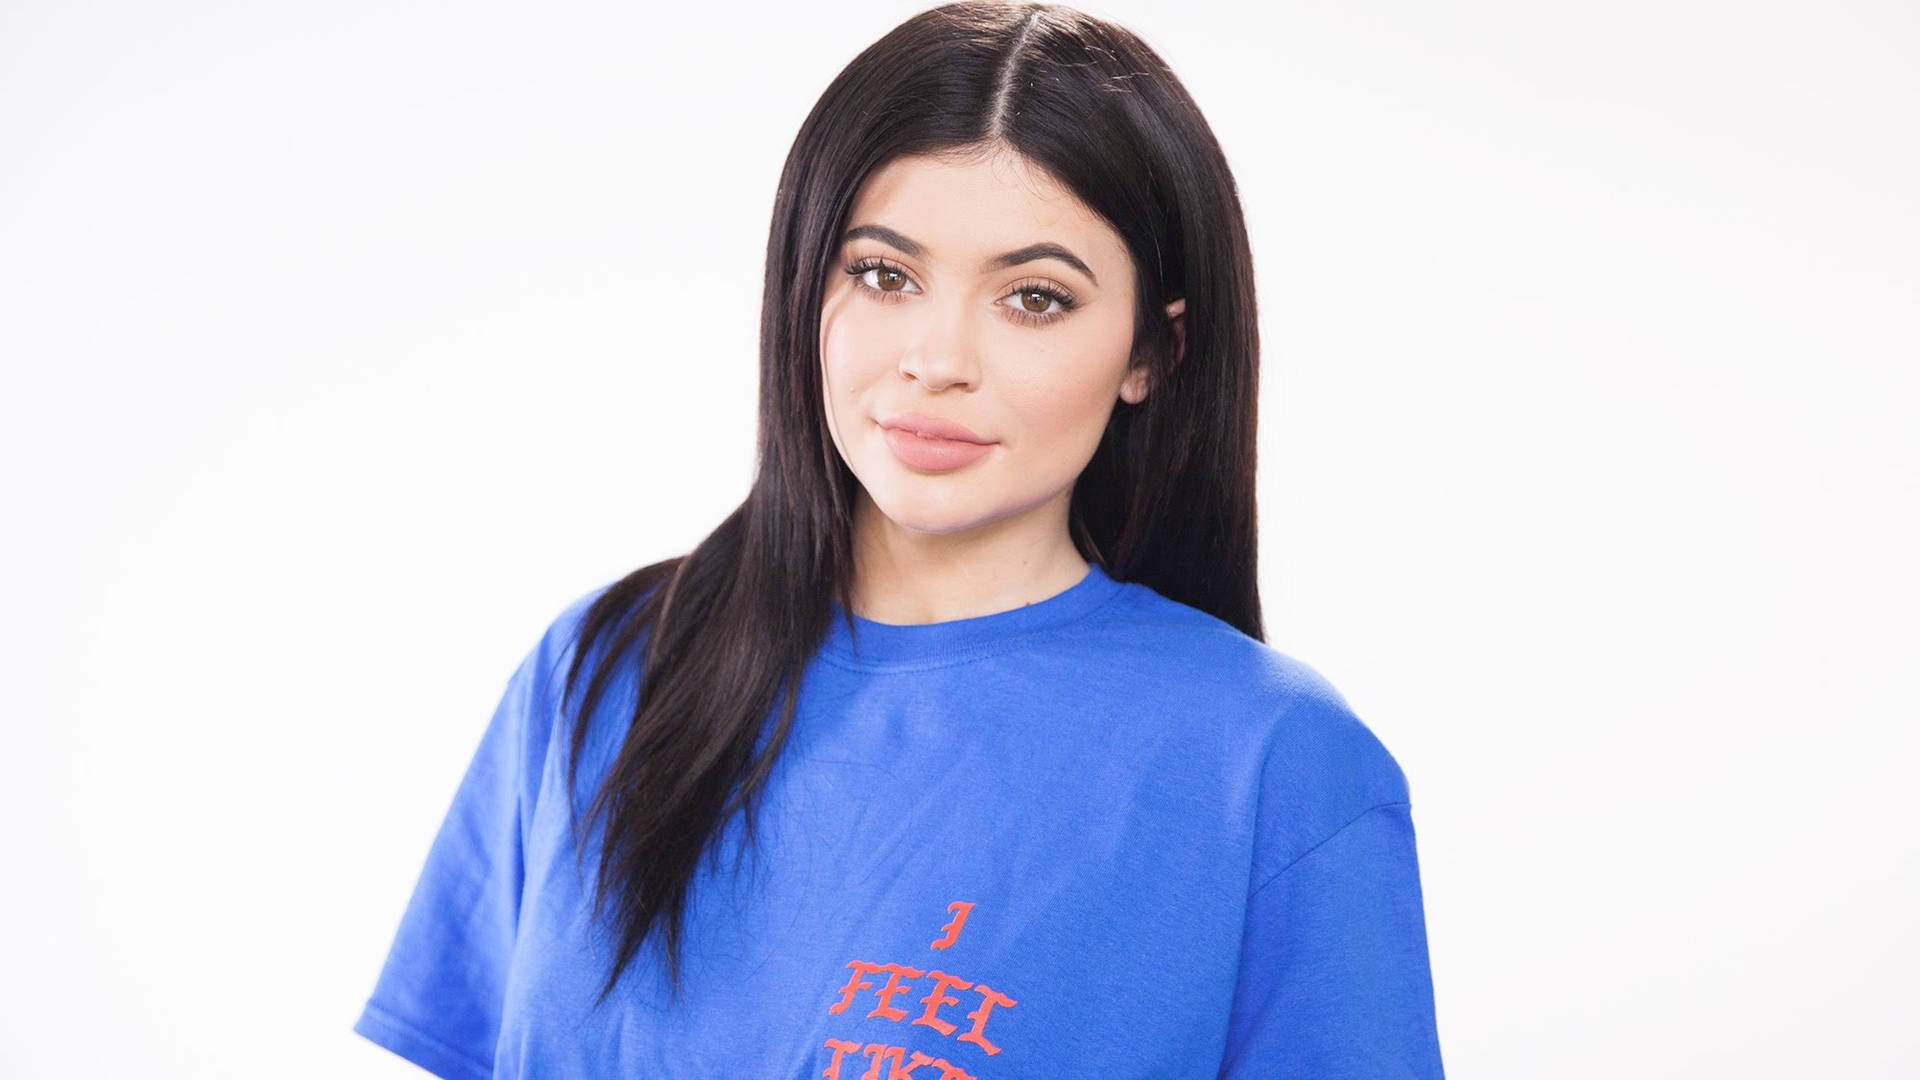 Kylie Jenner Wearing Blue Shirt Background